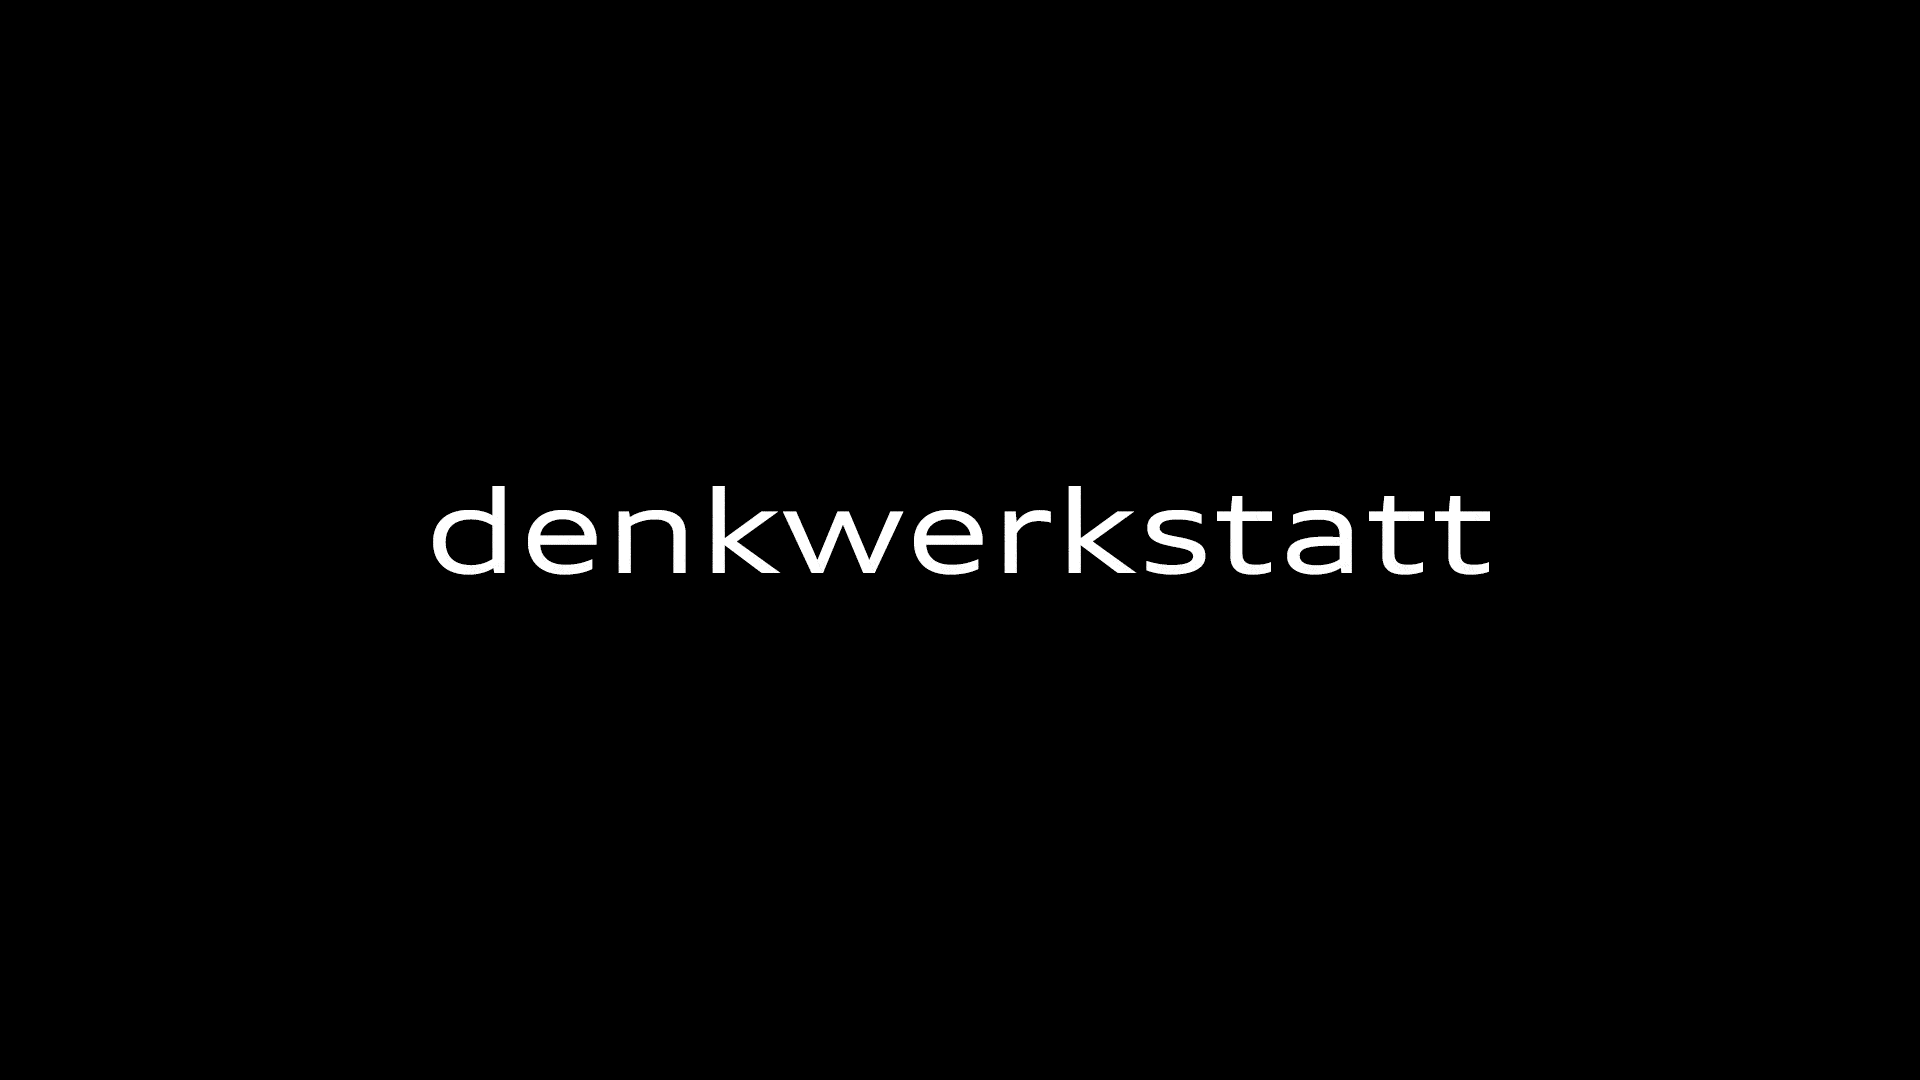 The people of denkwerkstatt